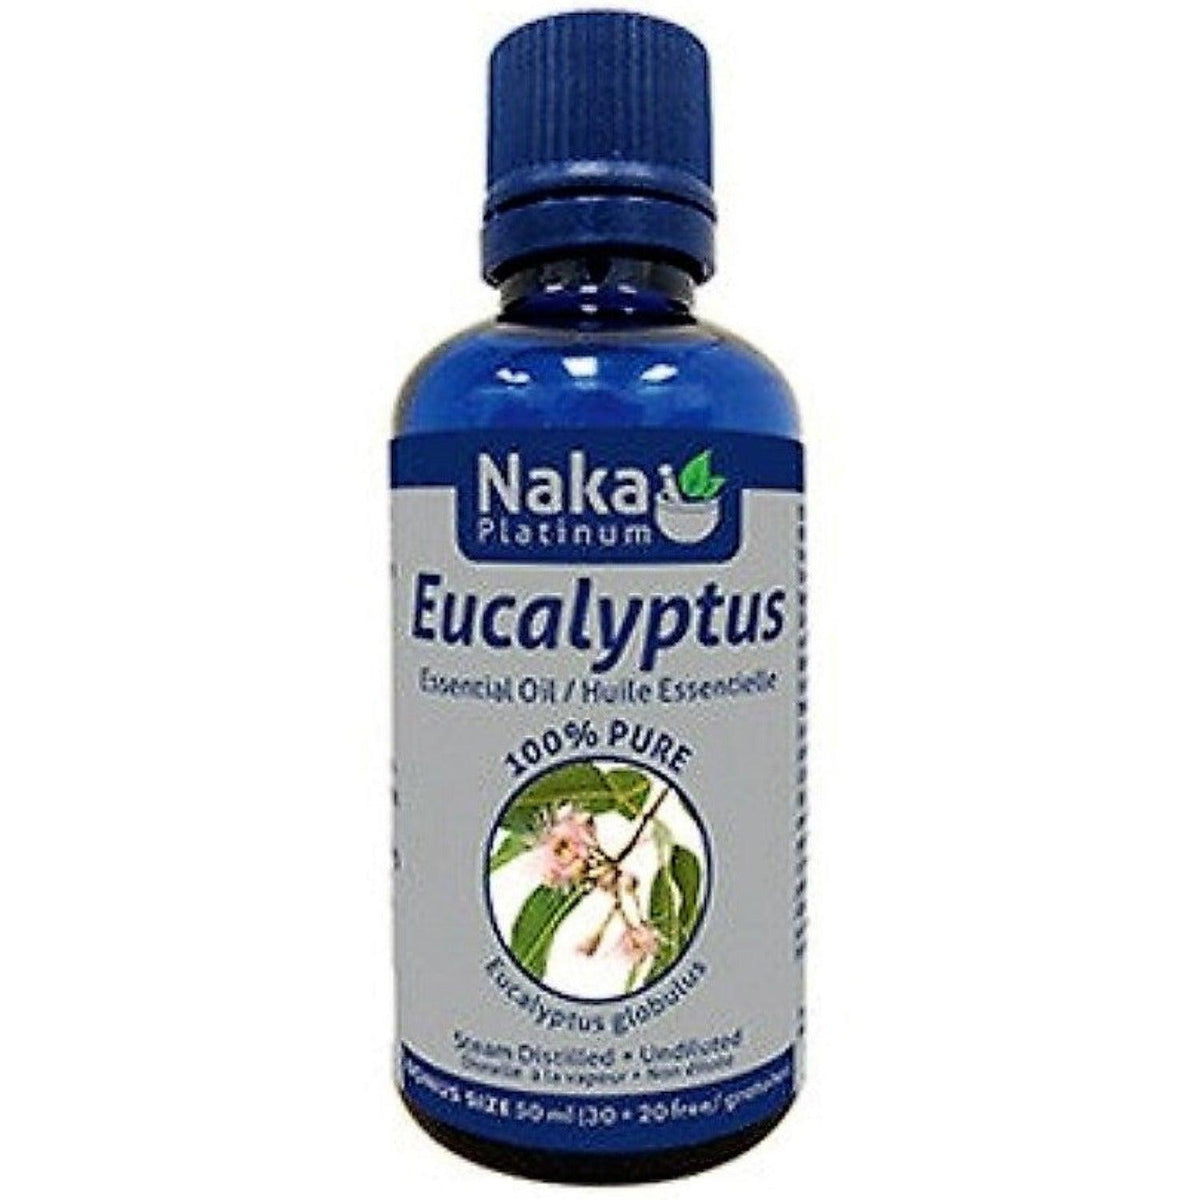 Naka Platinum Eucalyptus Essential Oil 50ml Essential Oils at Village Vitamin Store